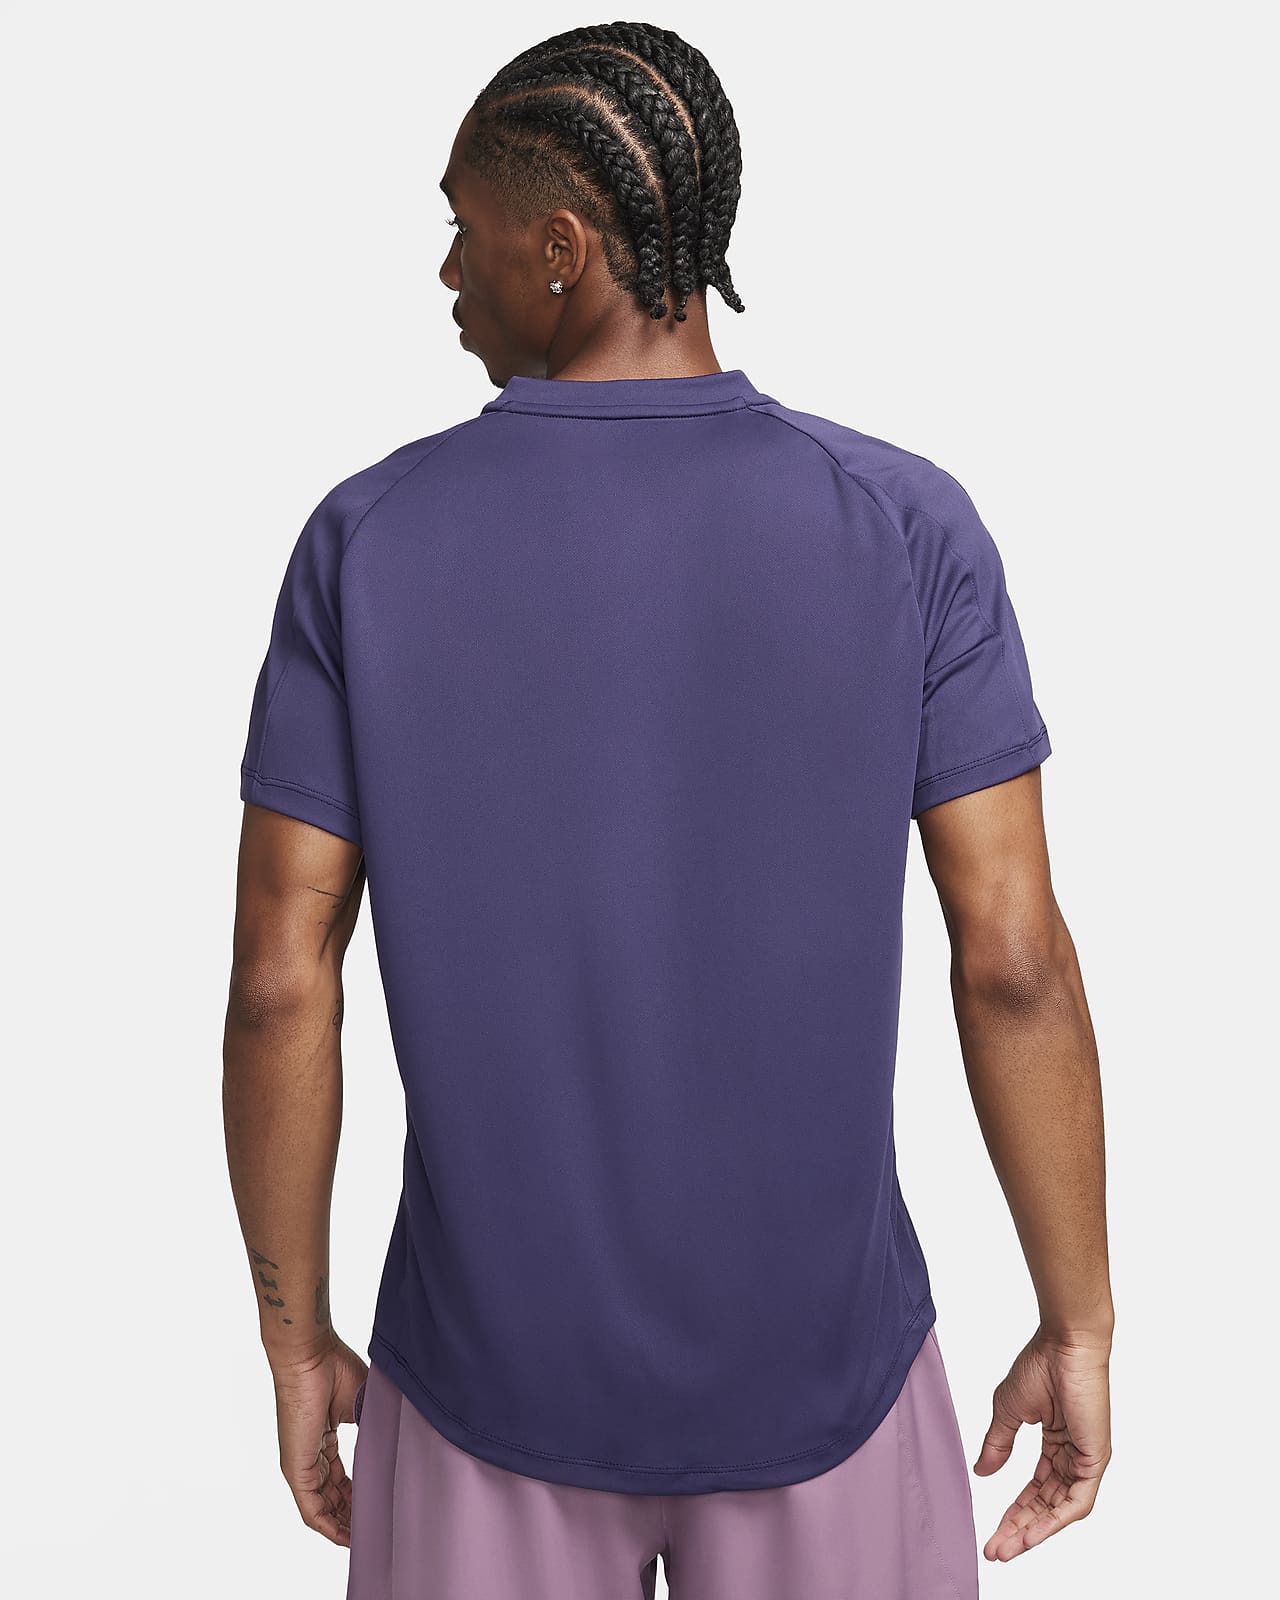 Nike Men's Dri-Fit LeBron Basketball T-Shirt, XL, Court Purple